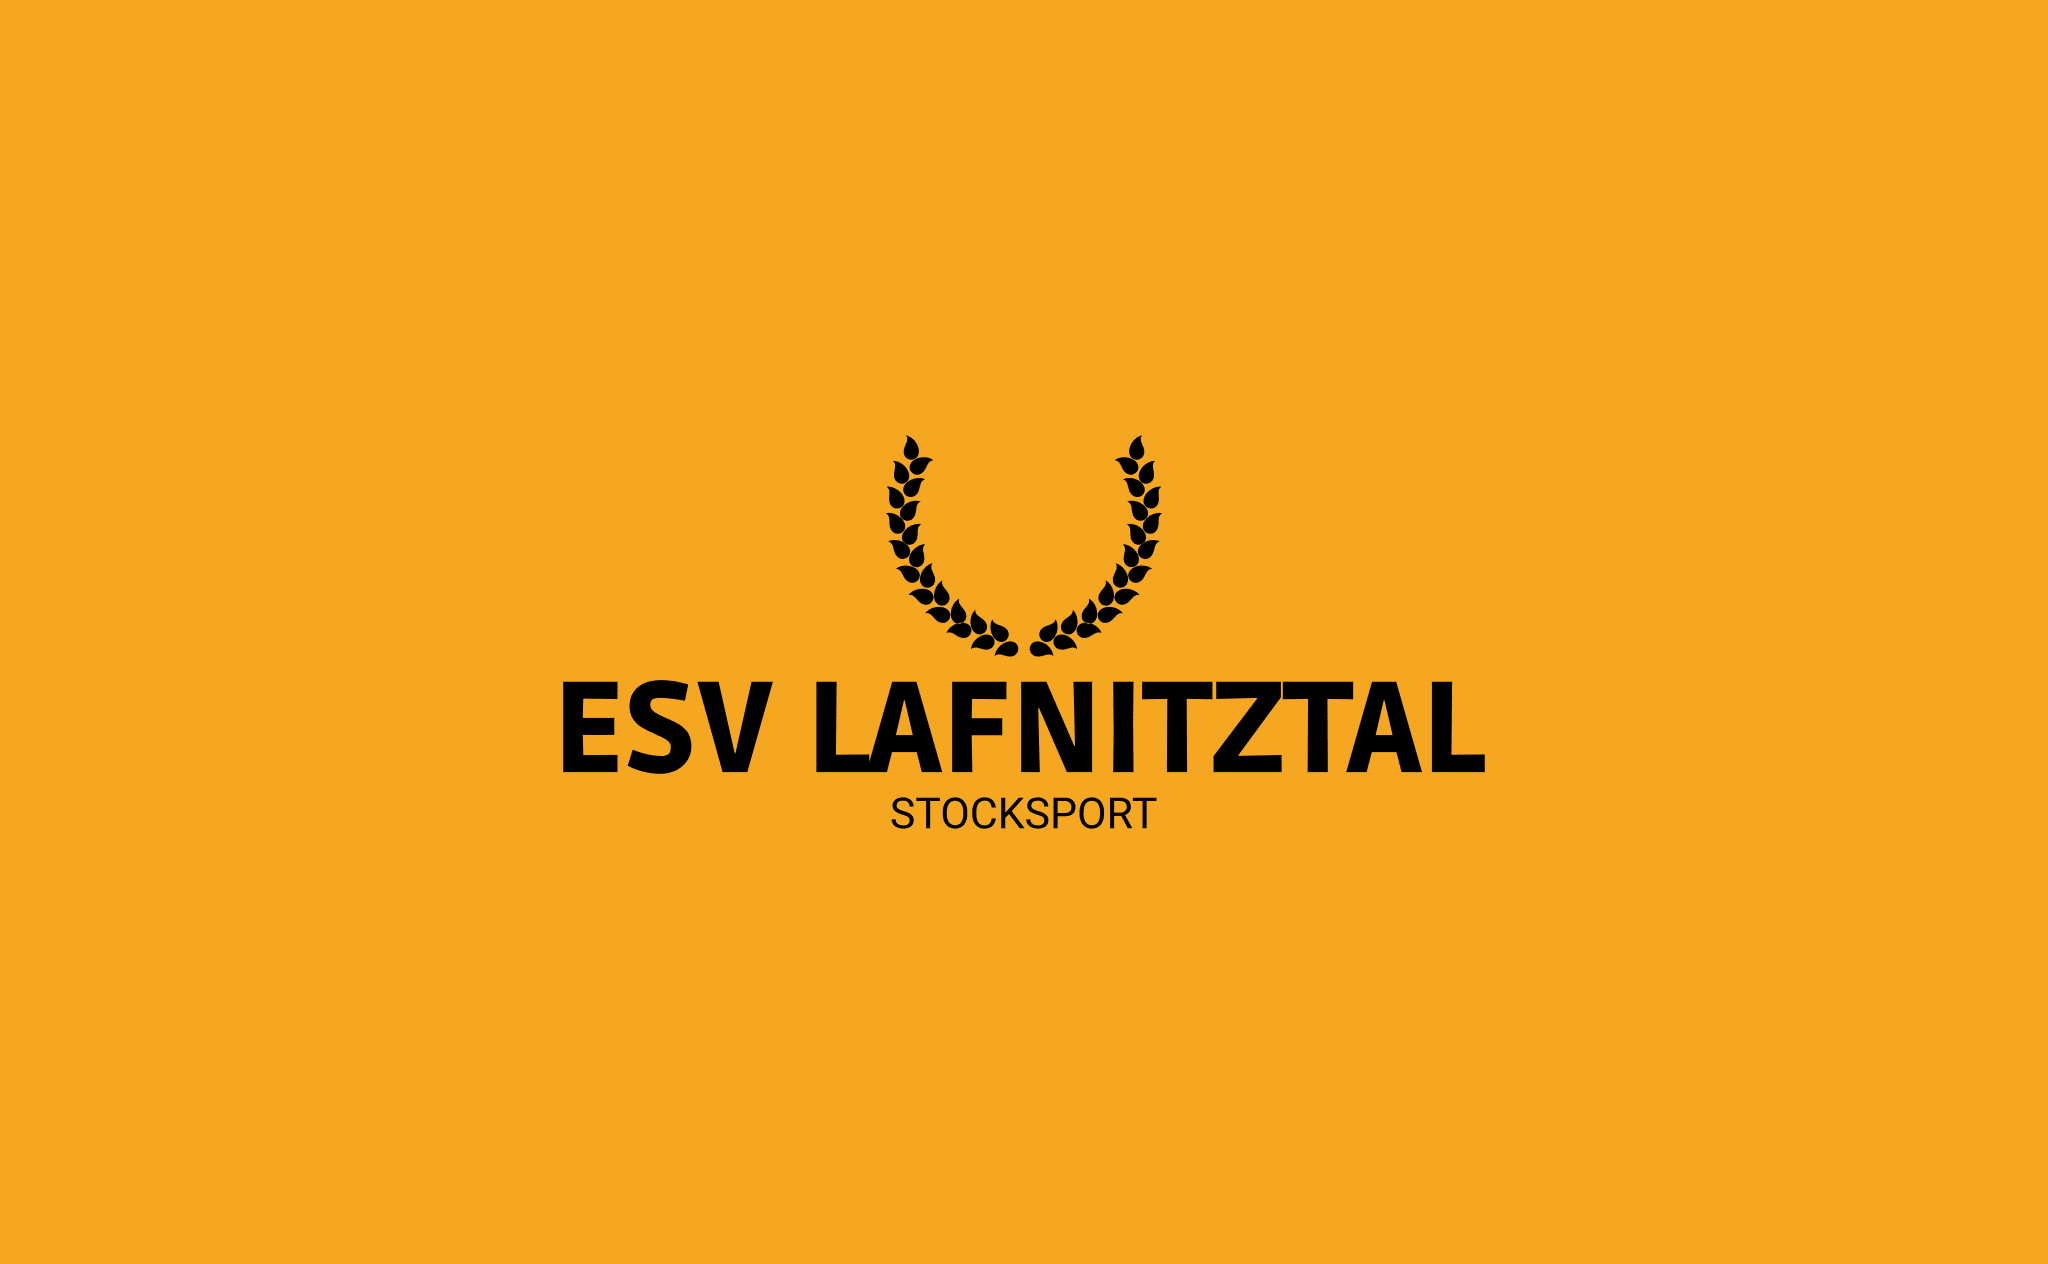 ESV LAFNITZTAL 1